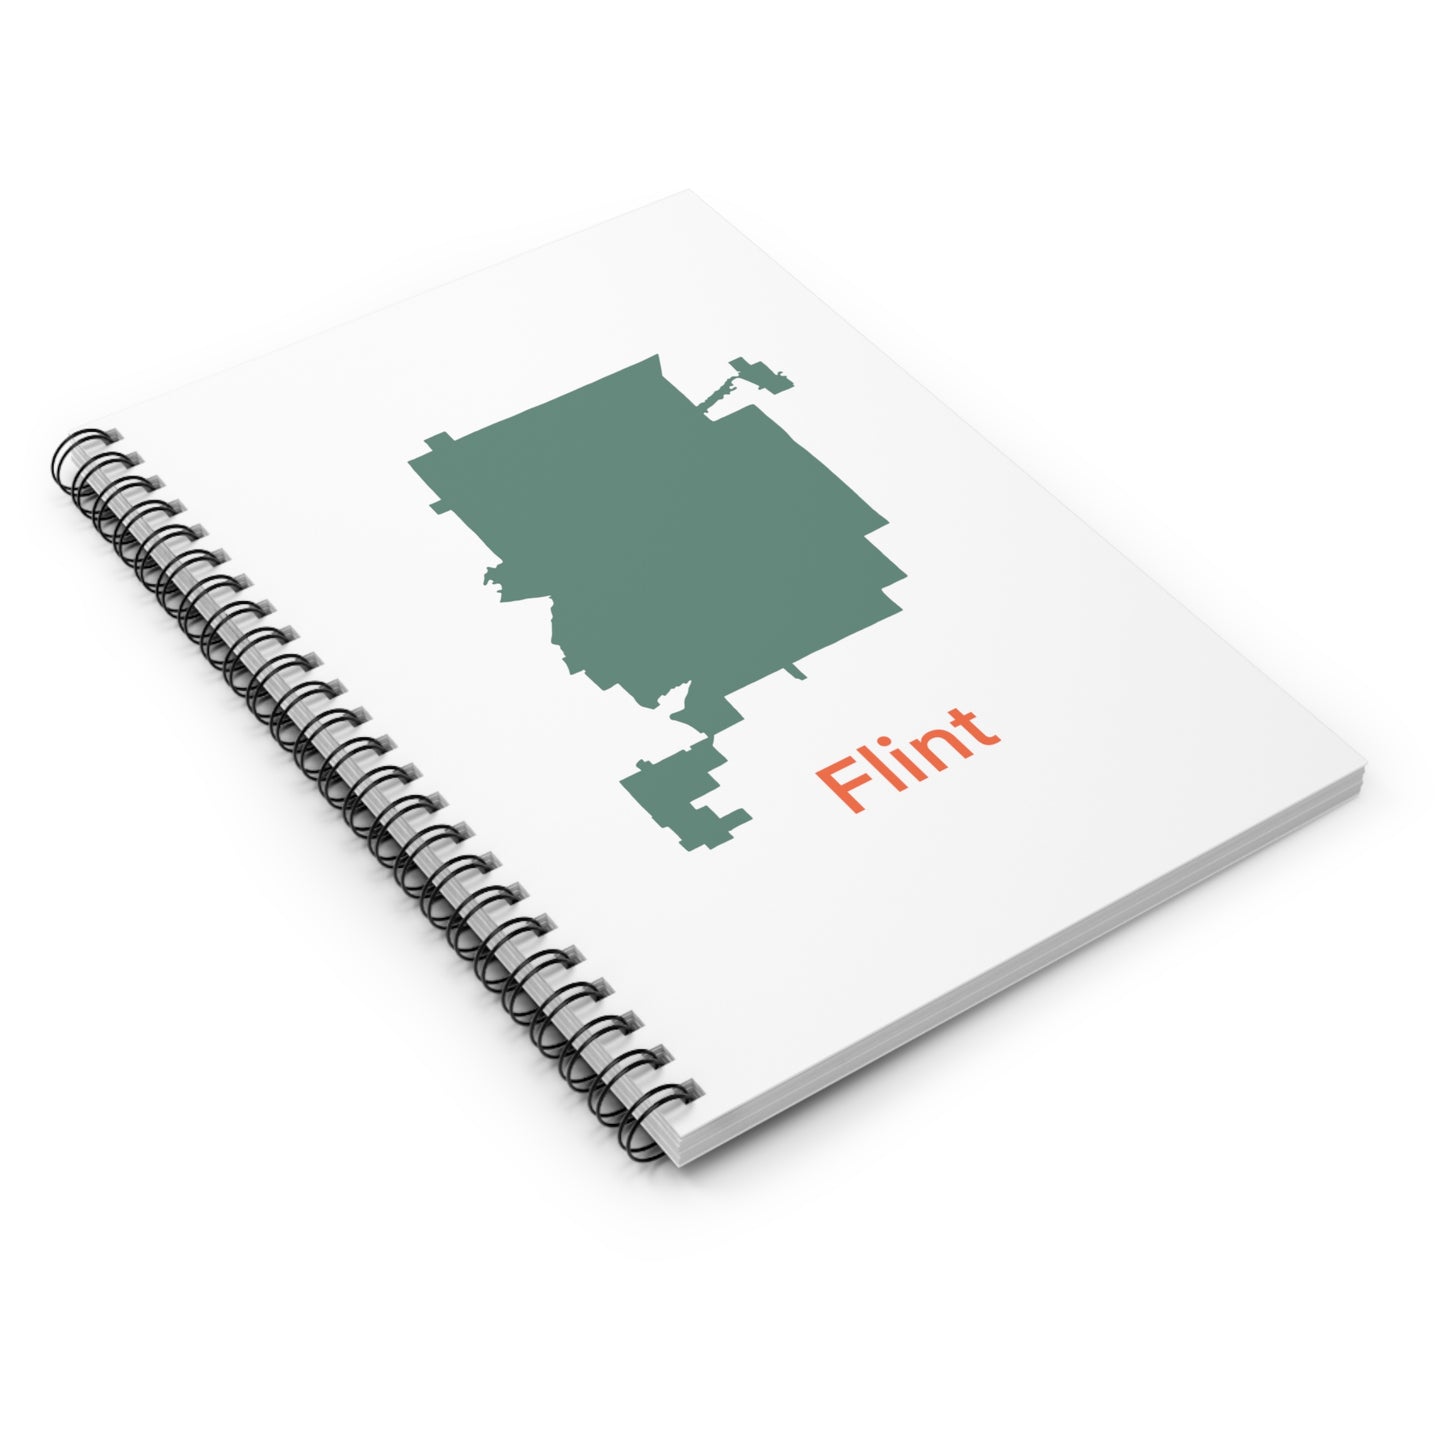 Flint in Mint Green Spiral Notebook - Ruled Line